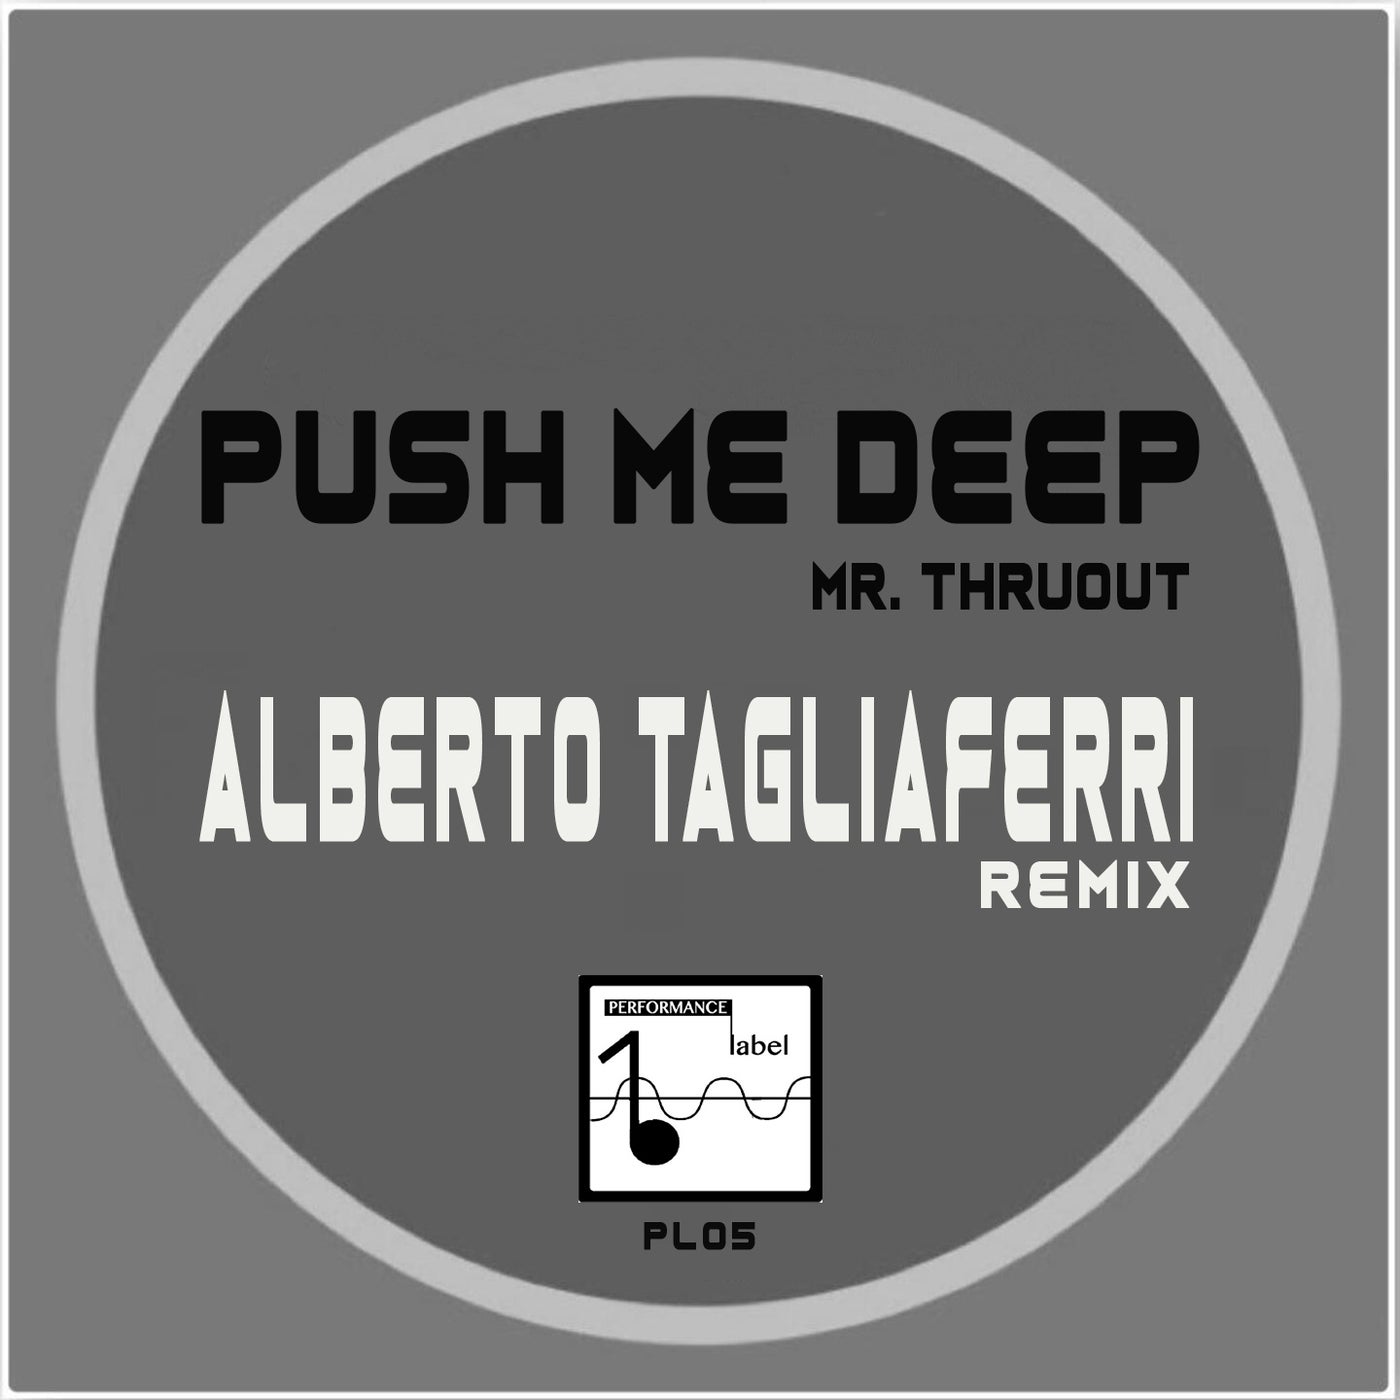 Push me deep (Alberto Tagliaferri Remix)